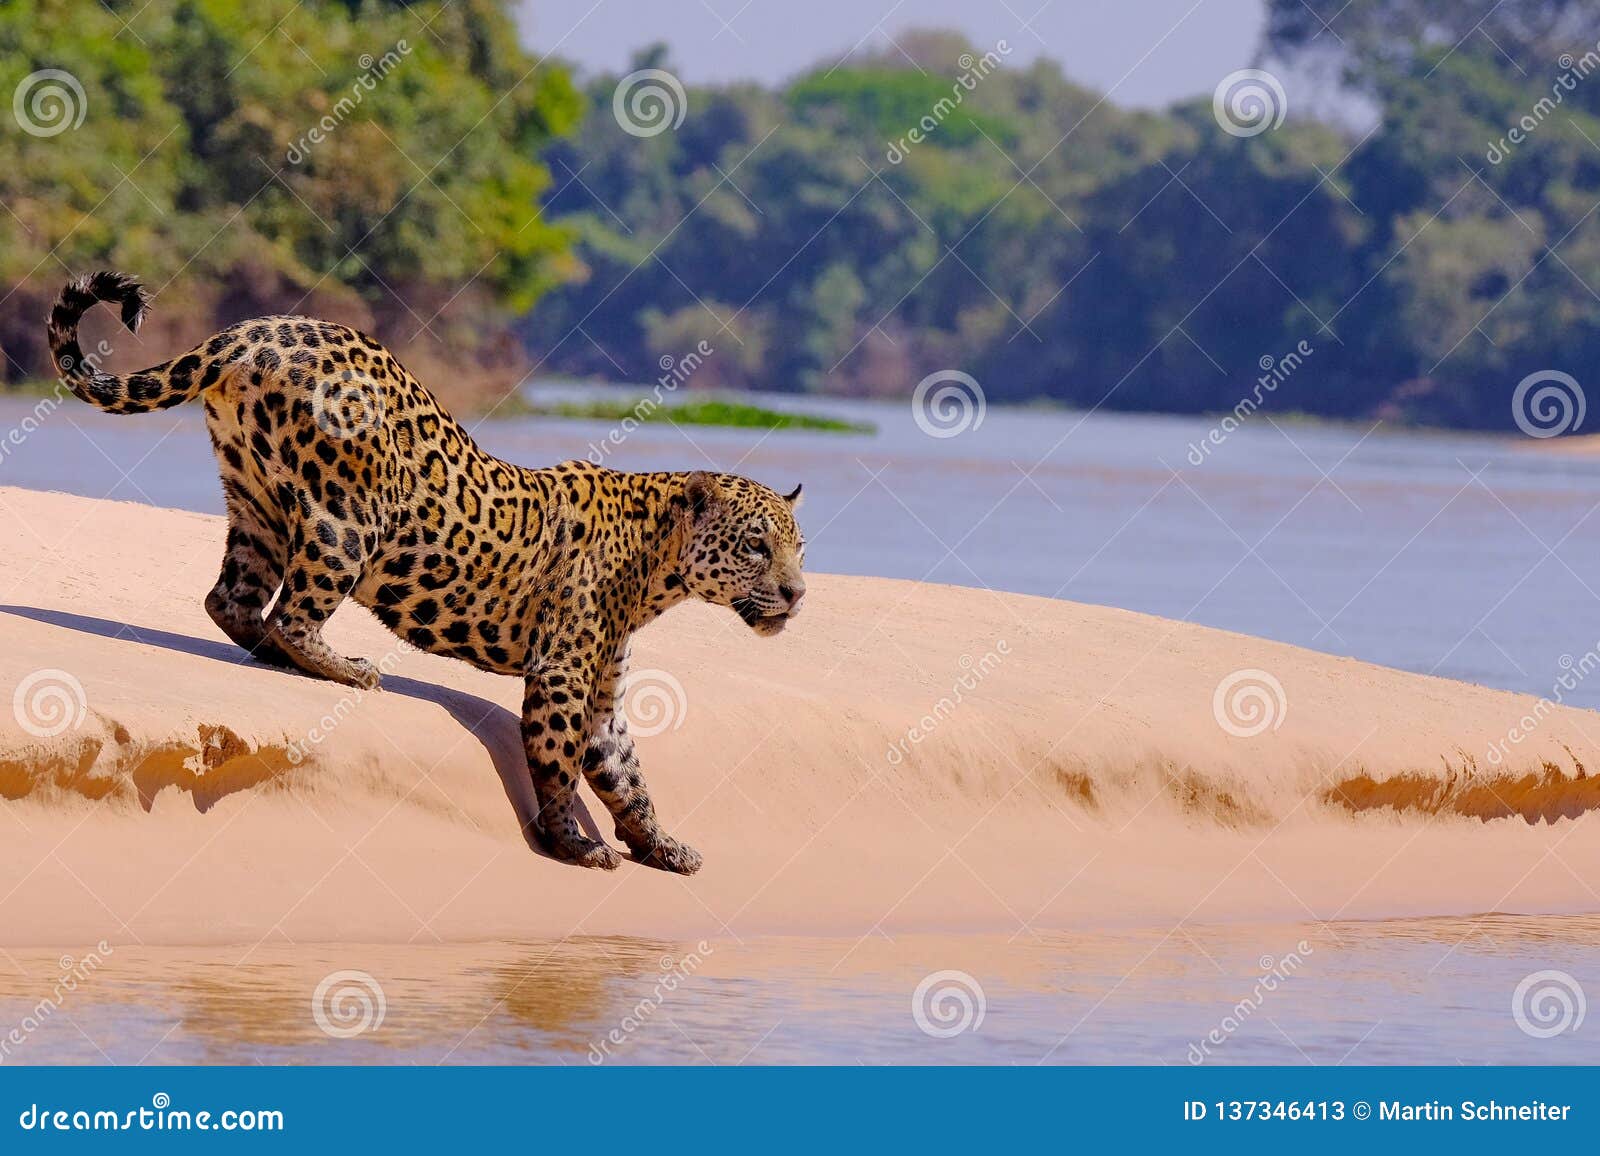 jaguar, panthera onca, female, cuiaba river, porto jofre, pantanal matogrossense, mato grosso do sul, brazil